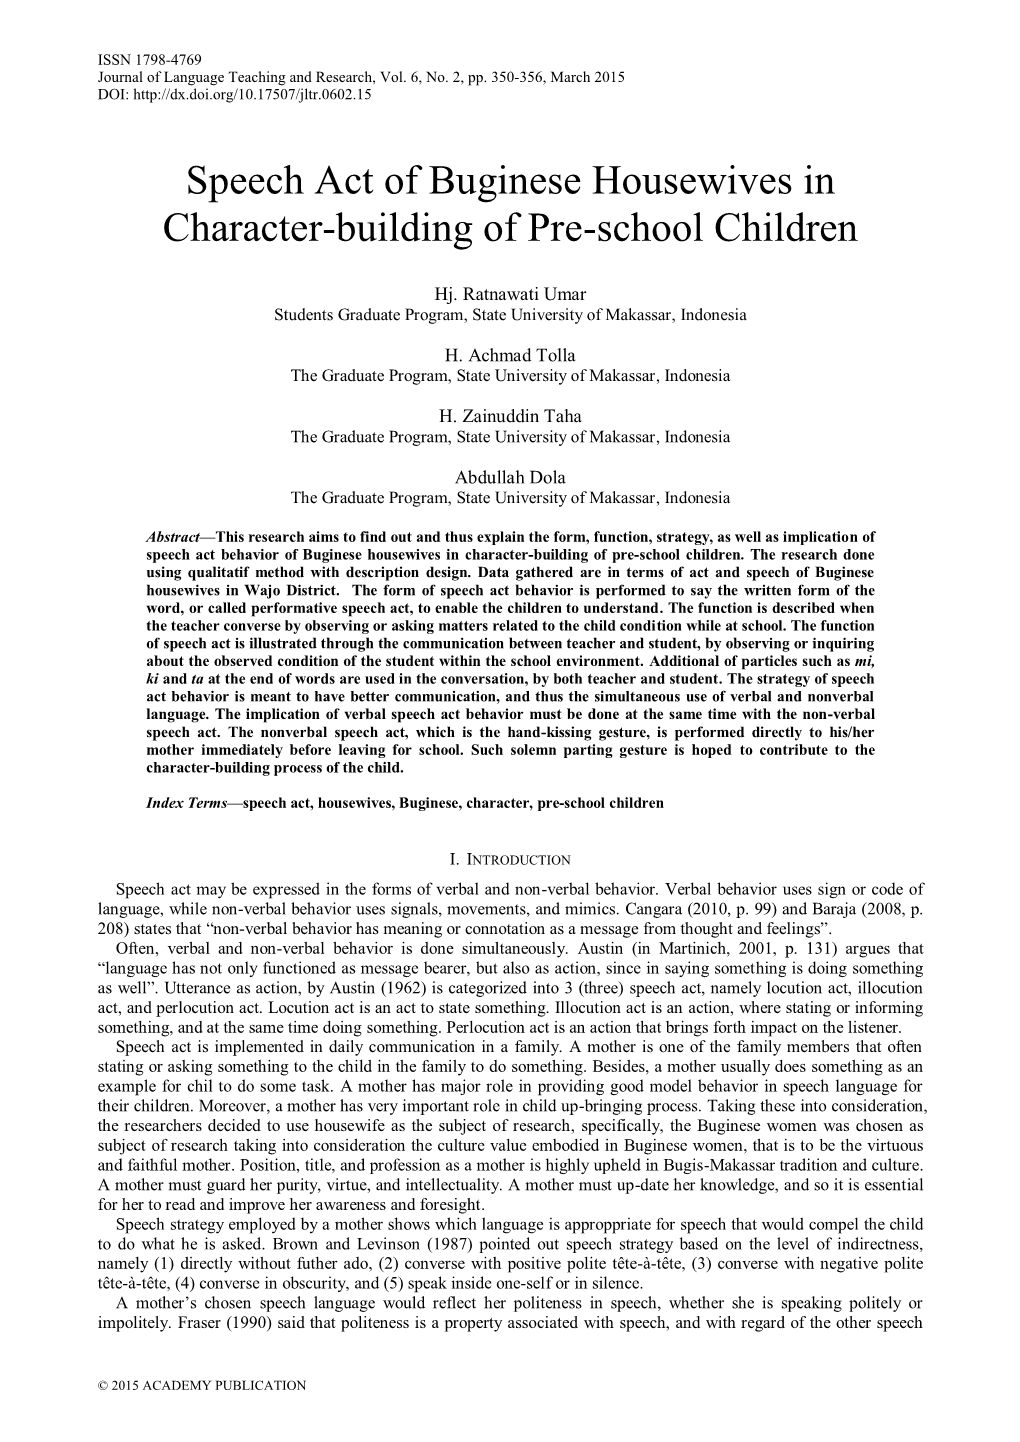 Speech Act of Buginese Housewives in Character-Building of Pre-School Children